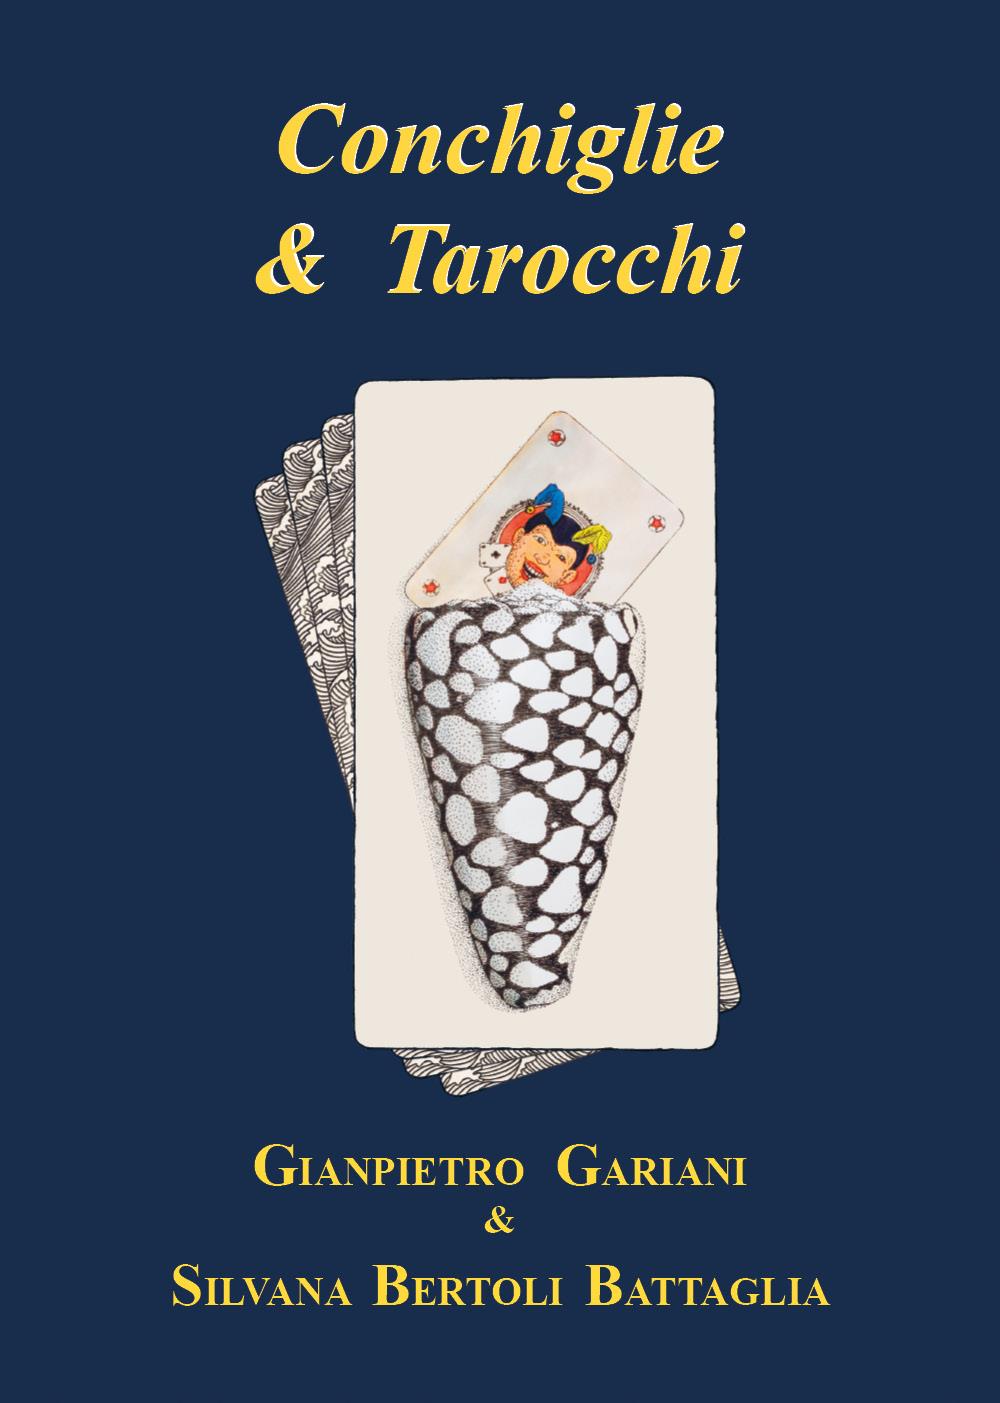 Conchiglie & Tarocchi